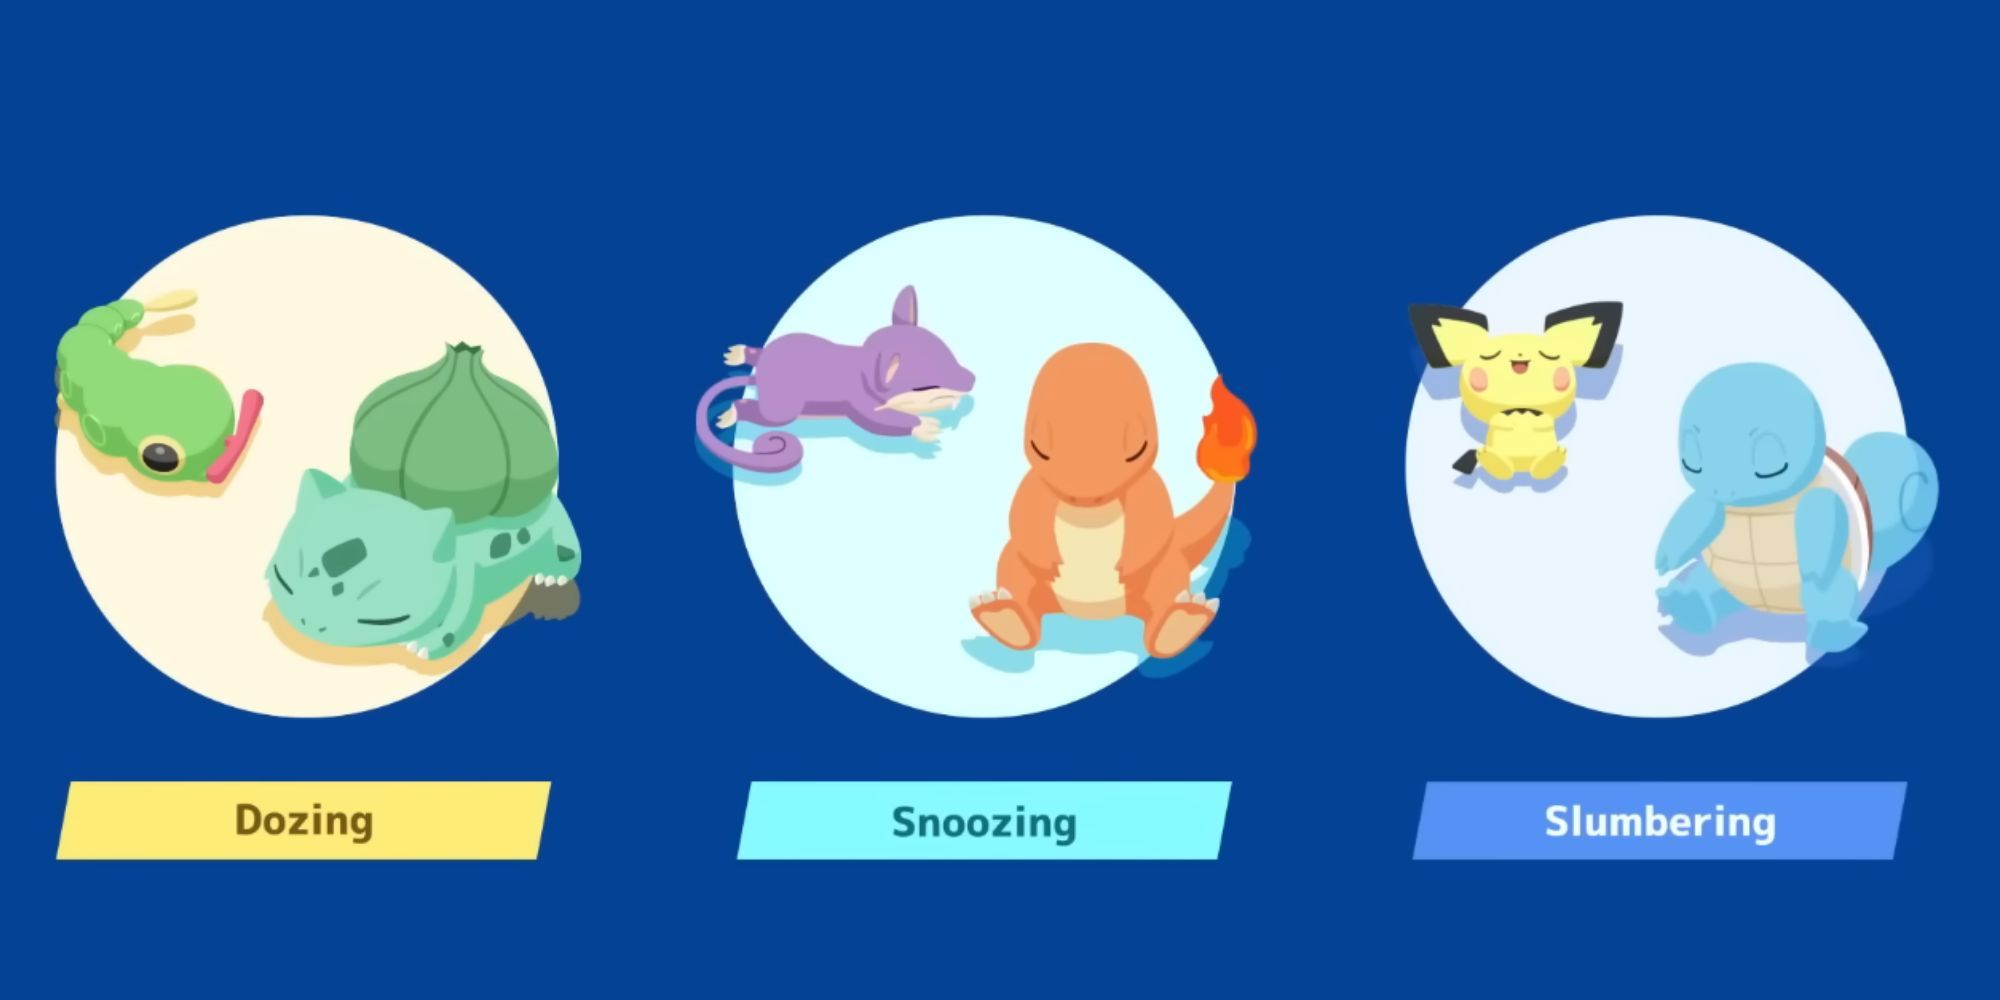 The three sleep-types